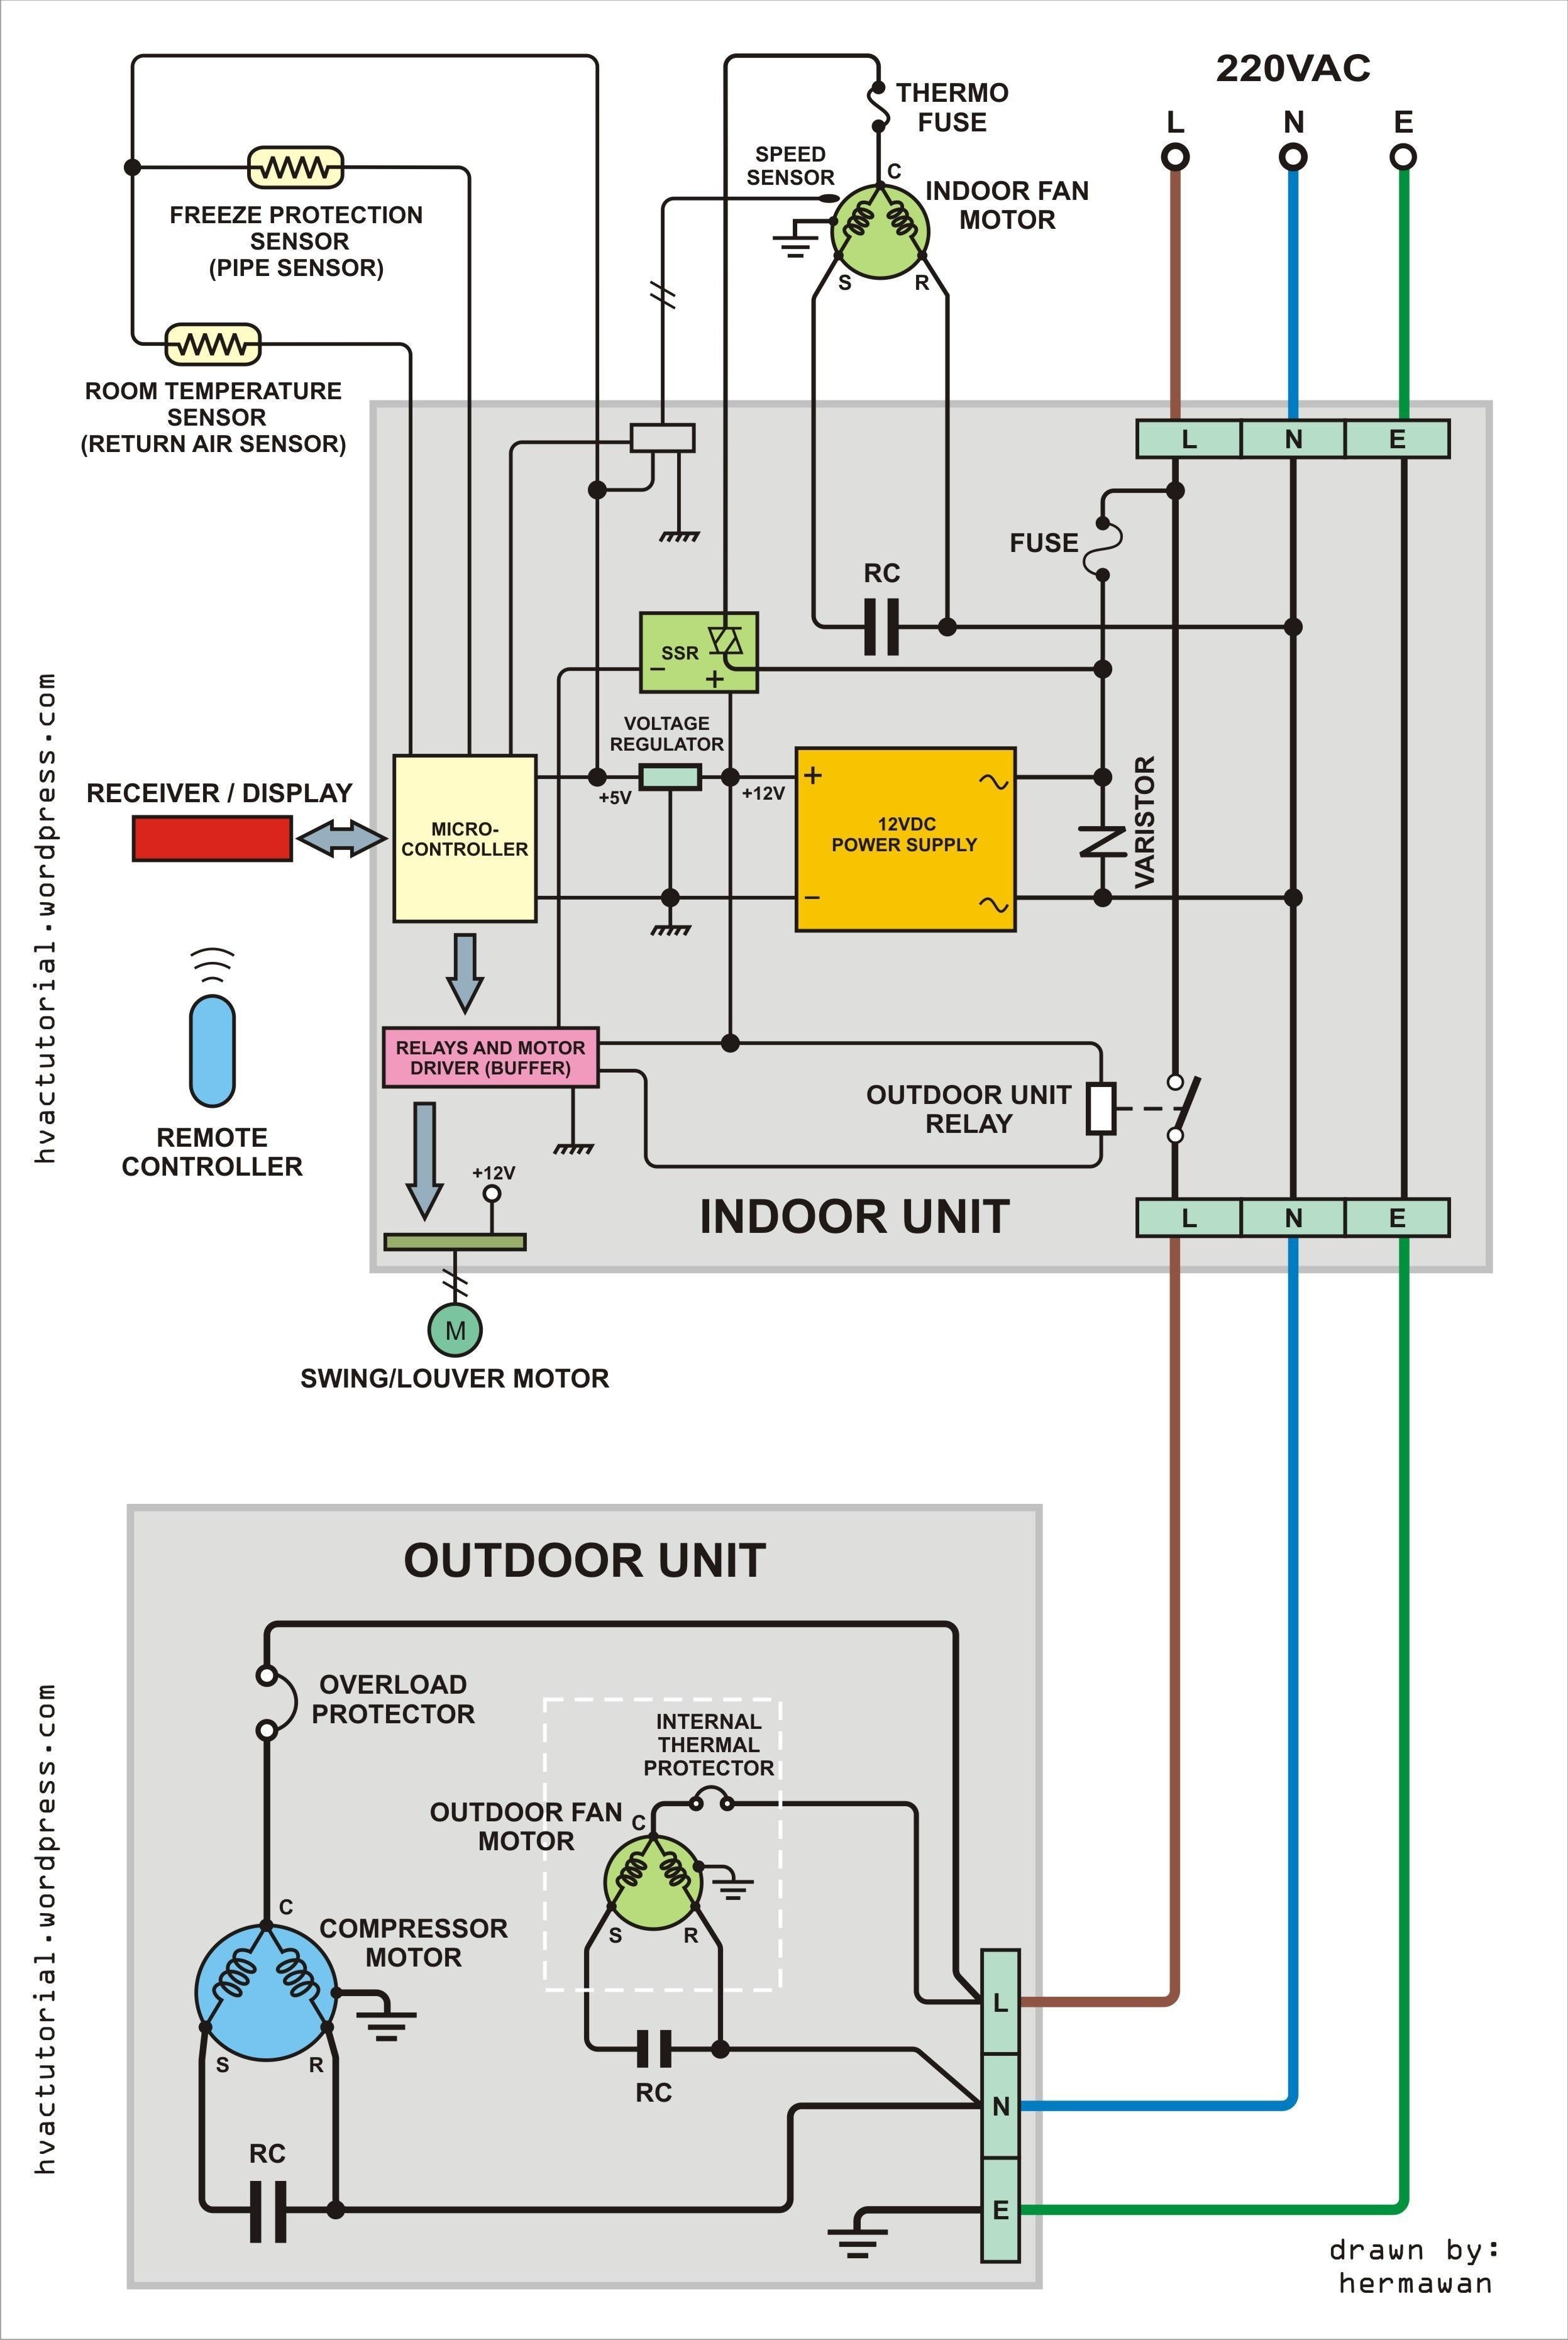 Auto Air Conditioning System Diagram Auto Air Condition System Diagram Of Auto Air Conditioning System Diagram